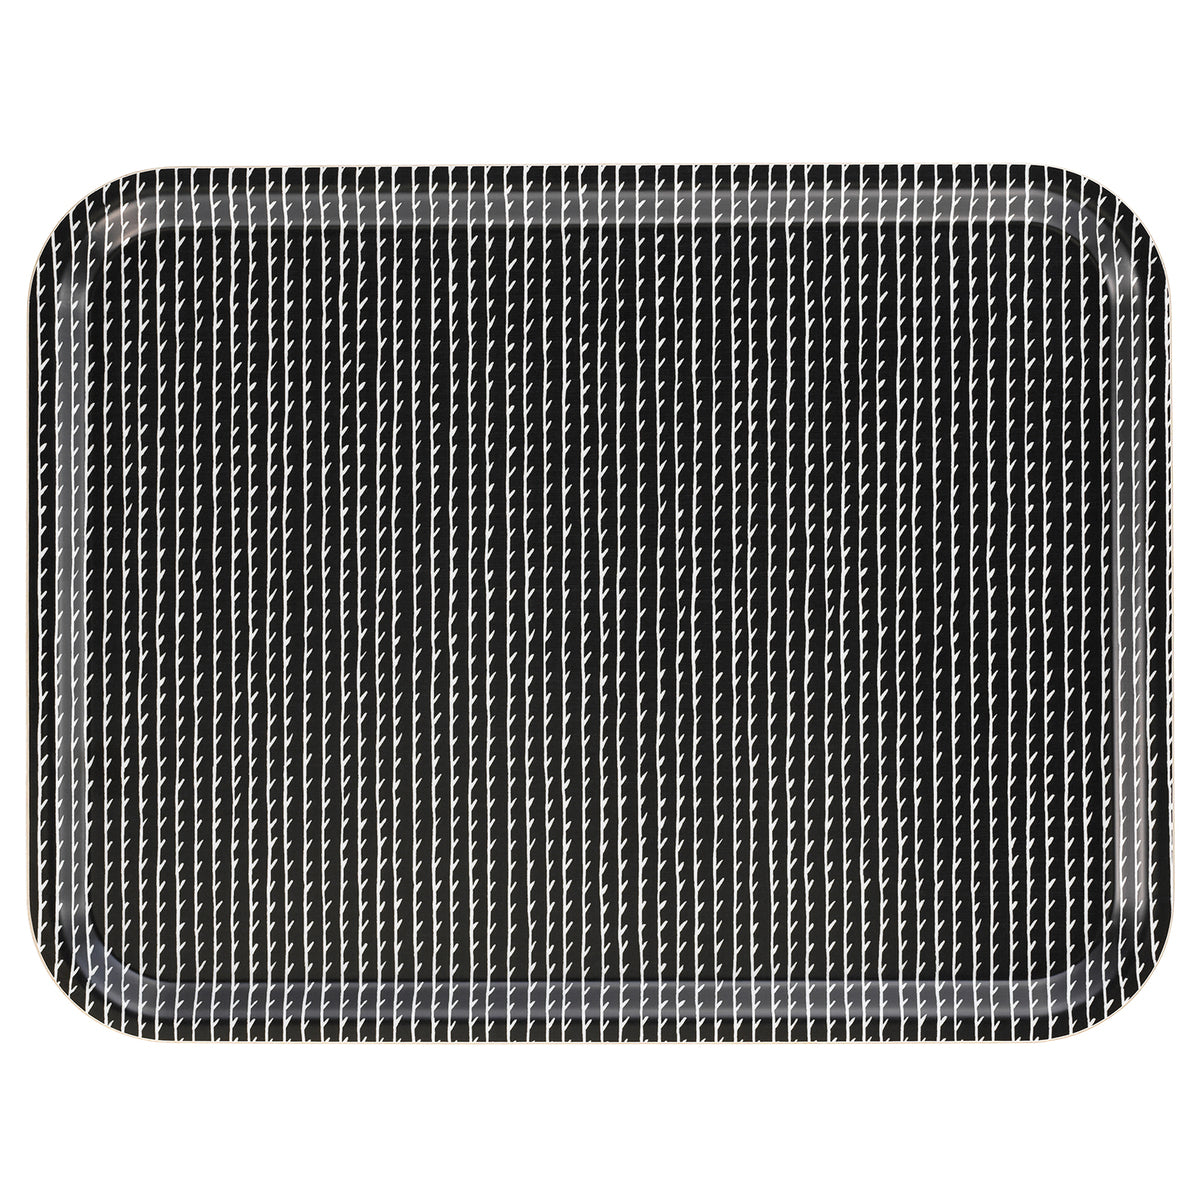 Rivi tray, 43 x 33 cm, black - white